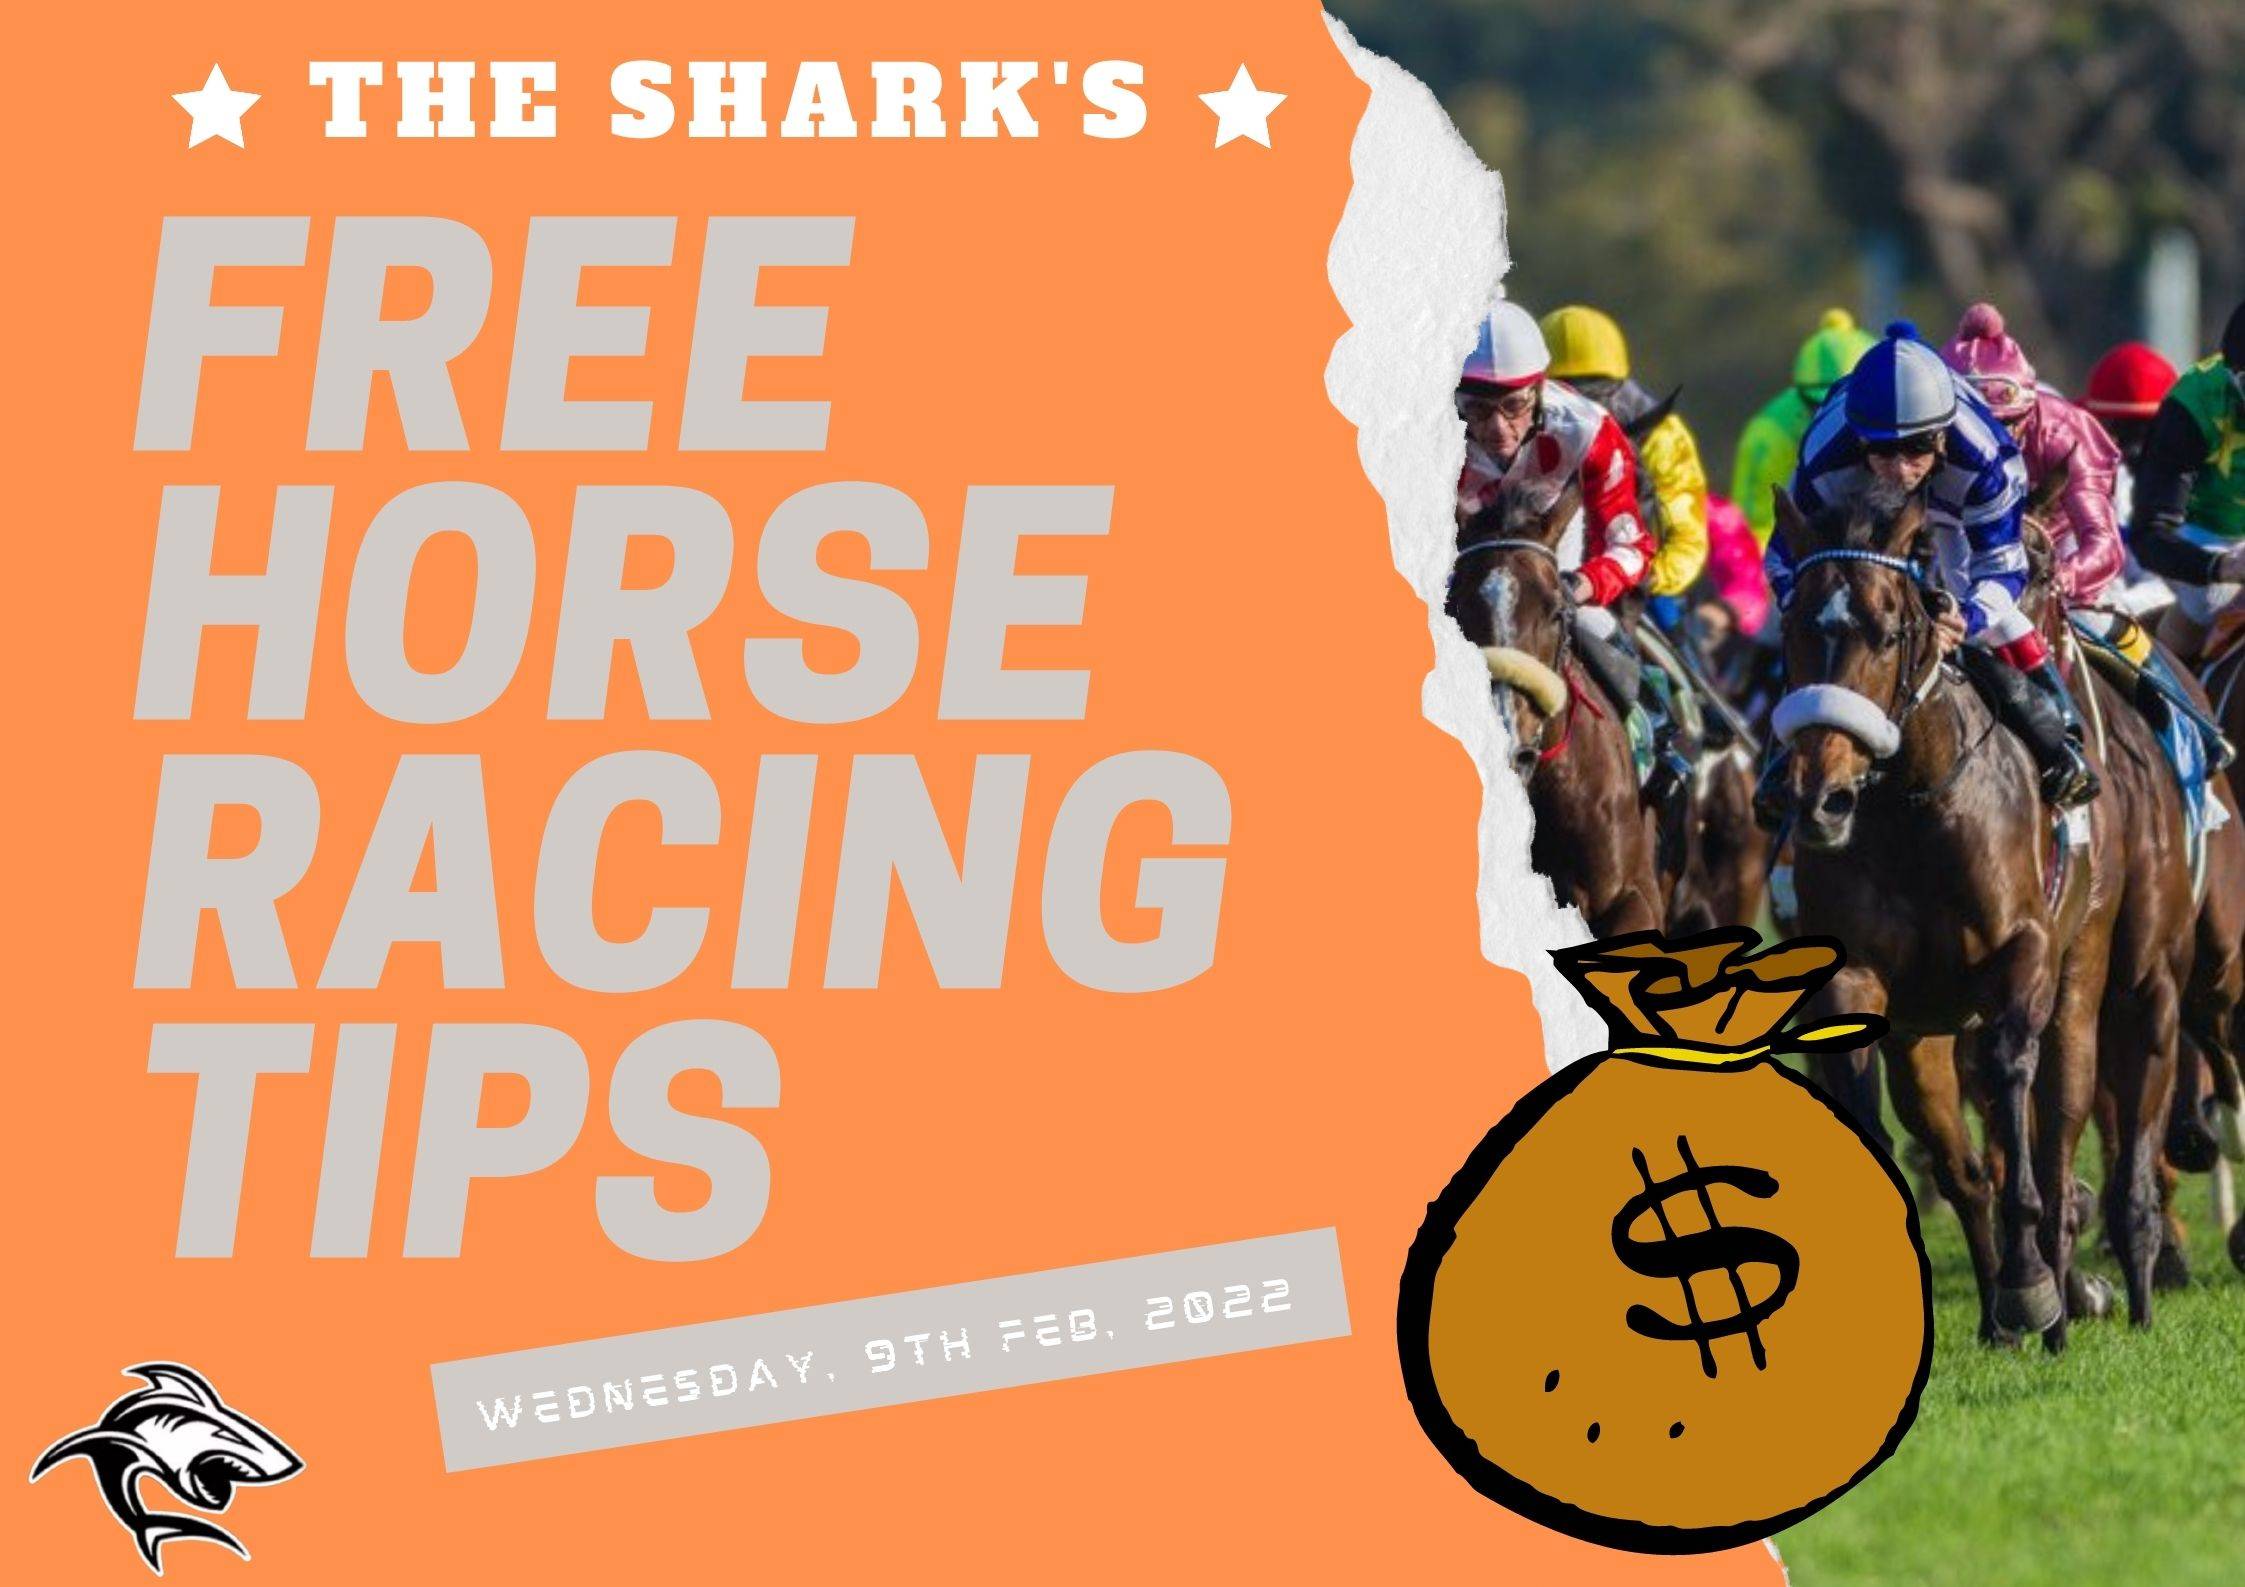 Free Horse Racing Tips - 9th Feb